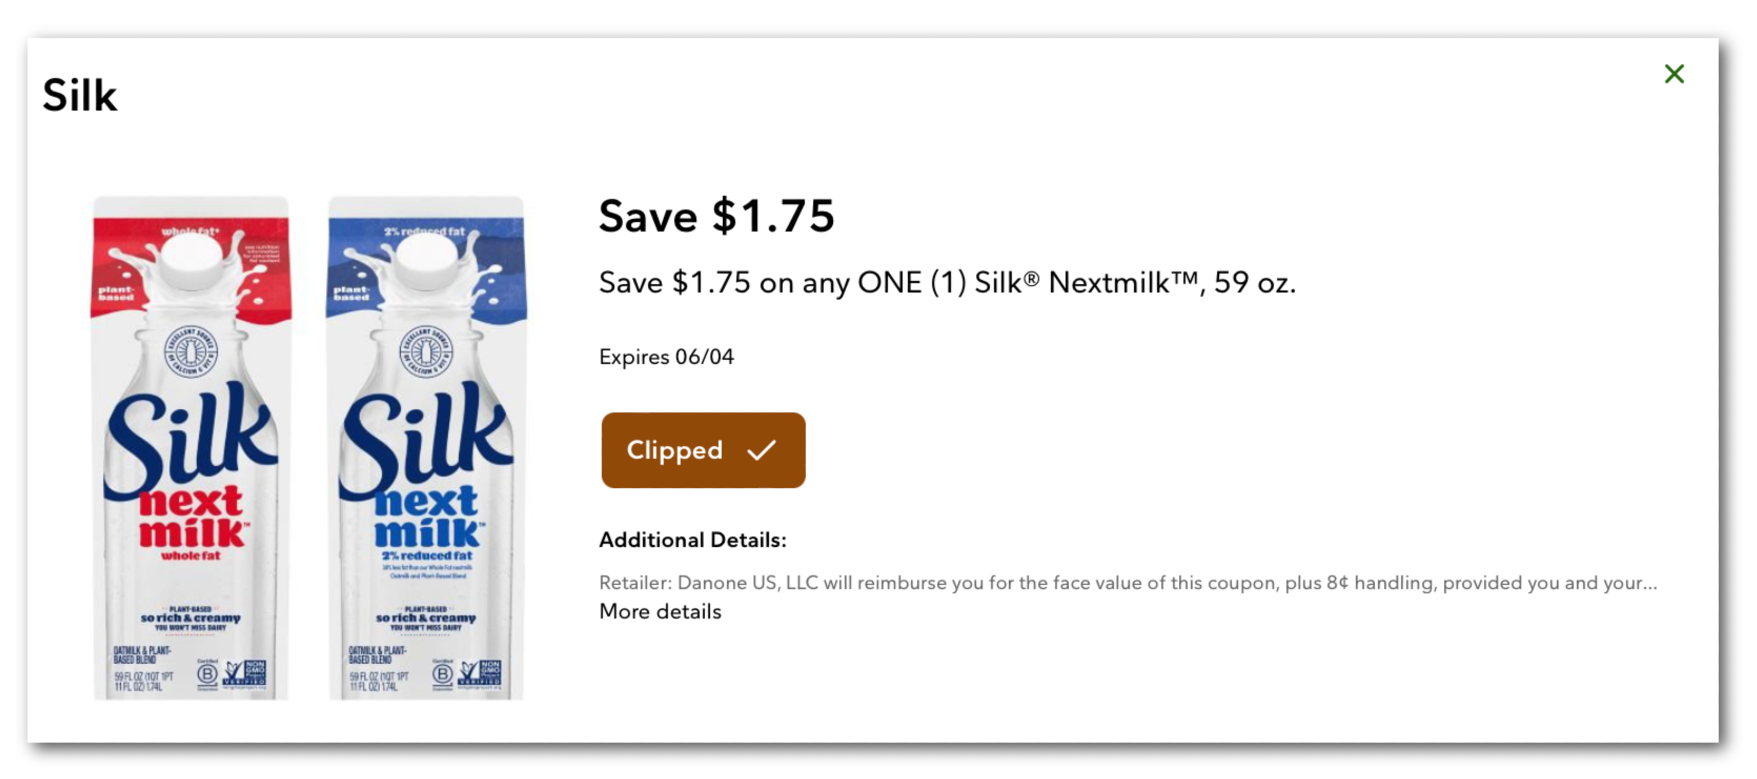 New Silk Nextmilk Digital Coupon - Score A Carton & Save At Publix on I Heart Publix